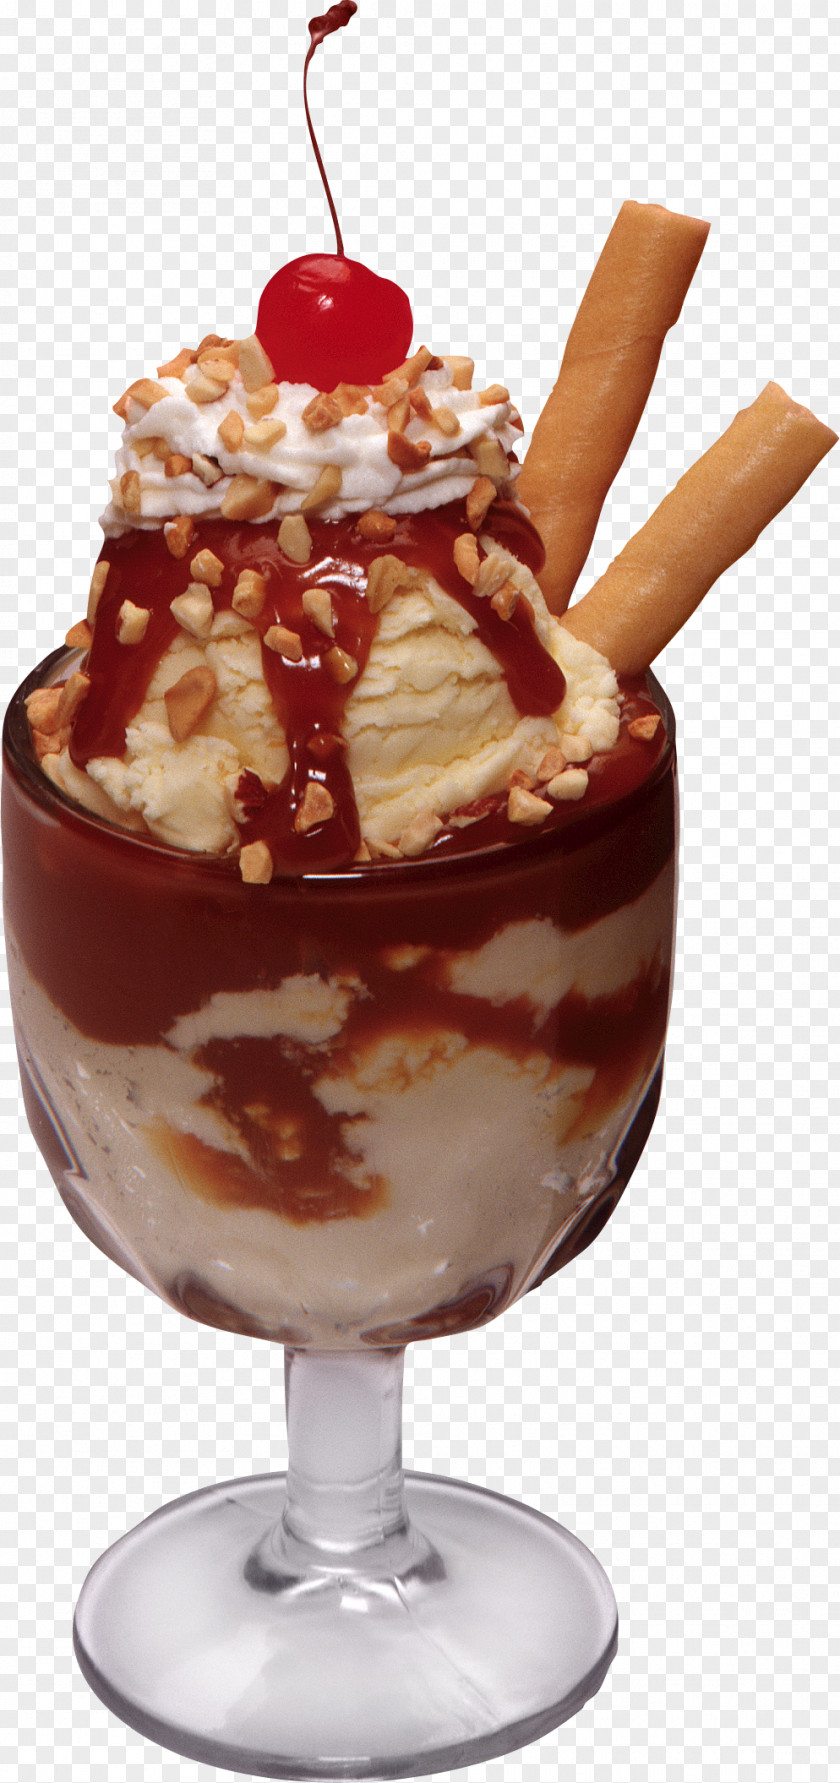 Ice Cream Image Cone Sundae Cupcake PNG